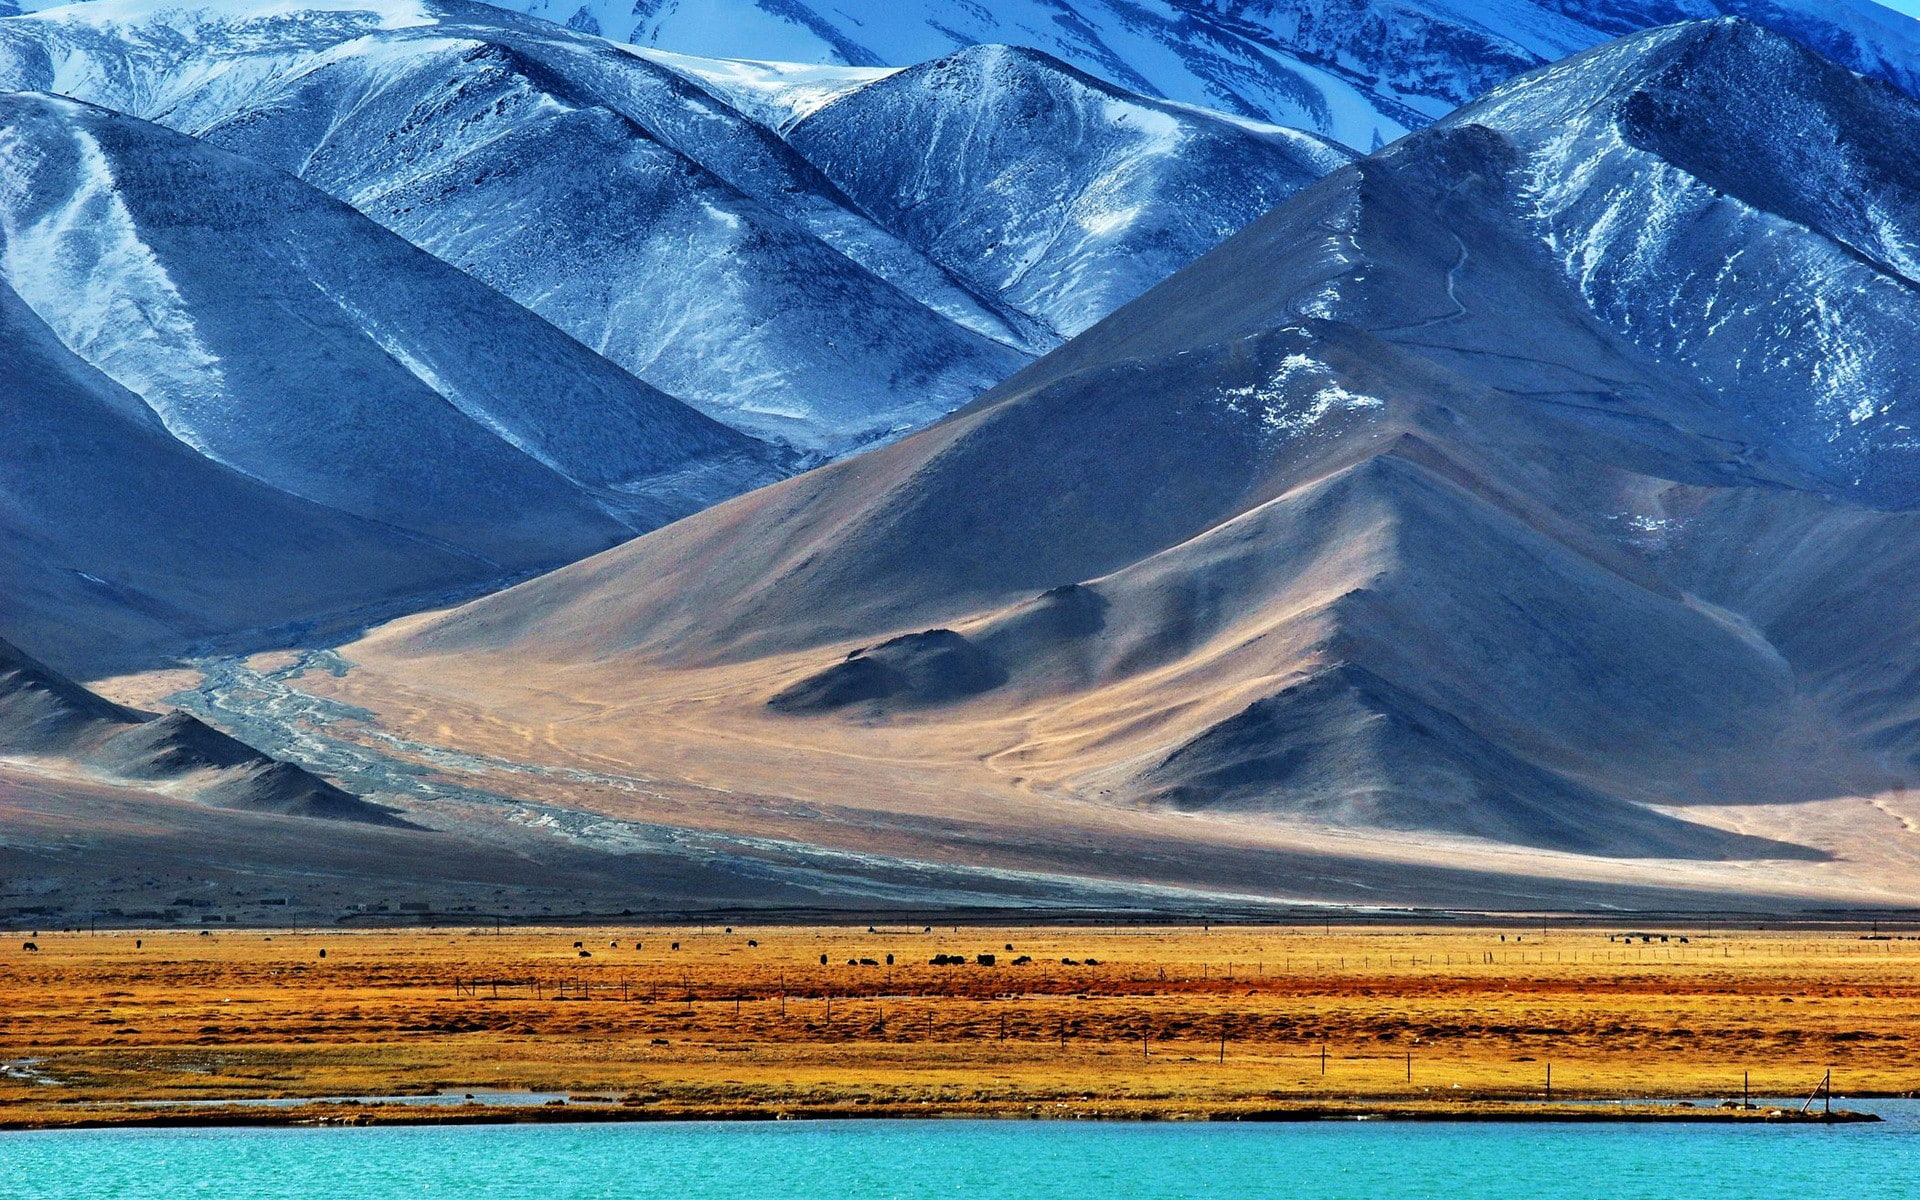 Pamir, Tajikistan, Mountain, Lake, landscape, environment, beauty in nature